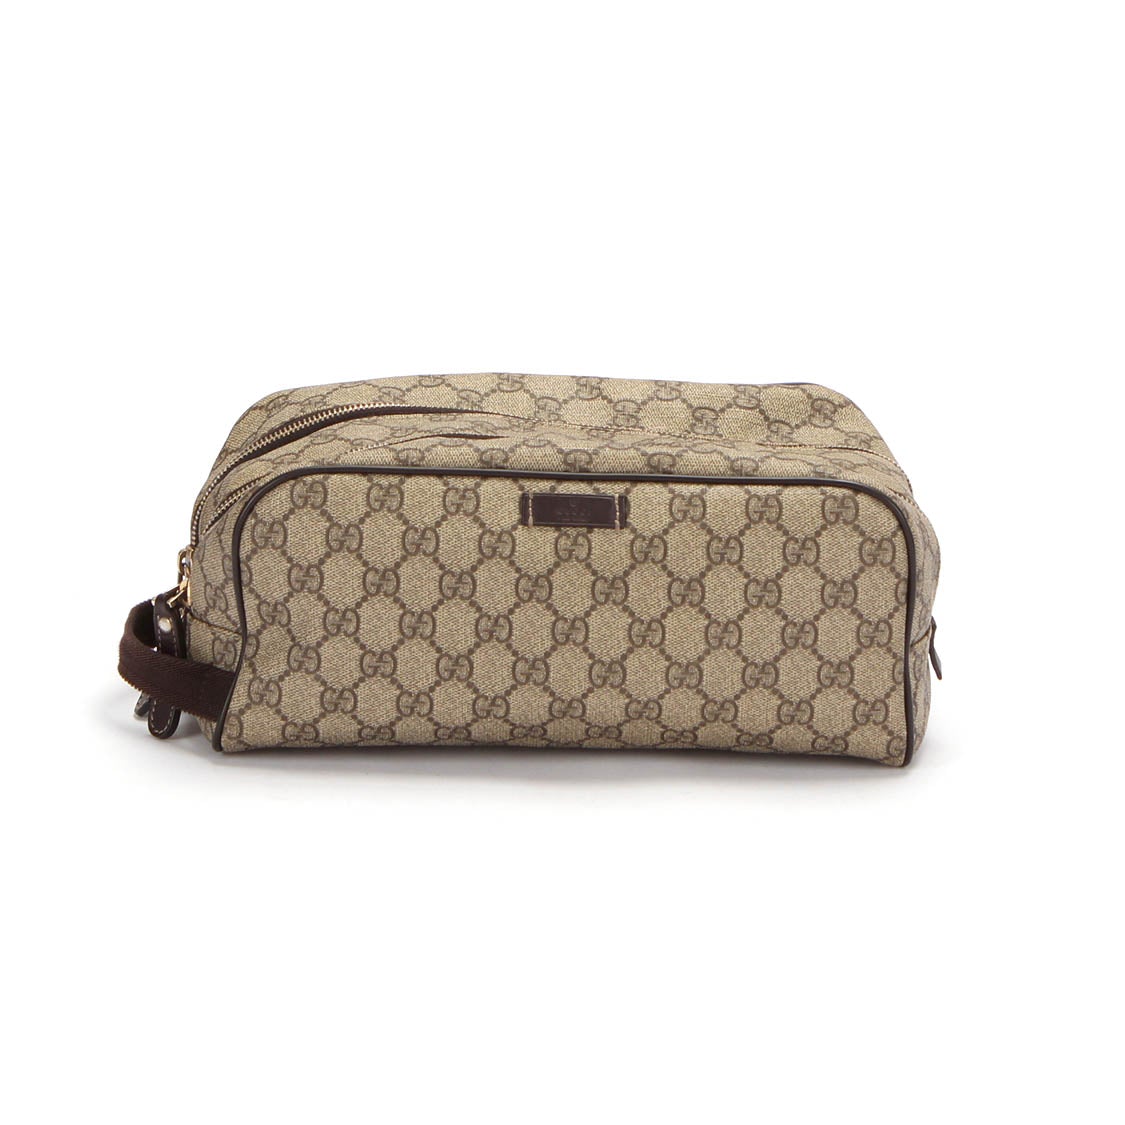 Gucci GG Supreme Clutch Bag